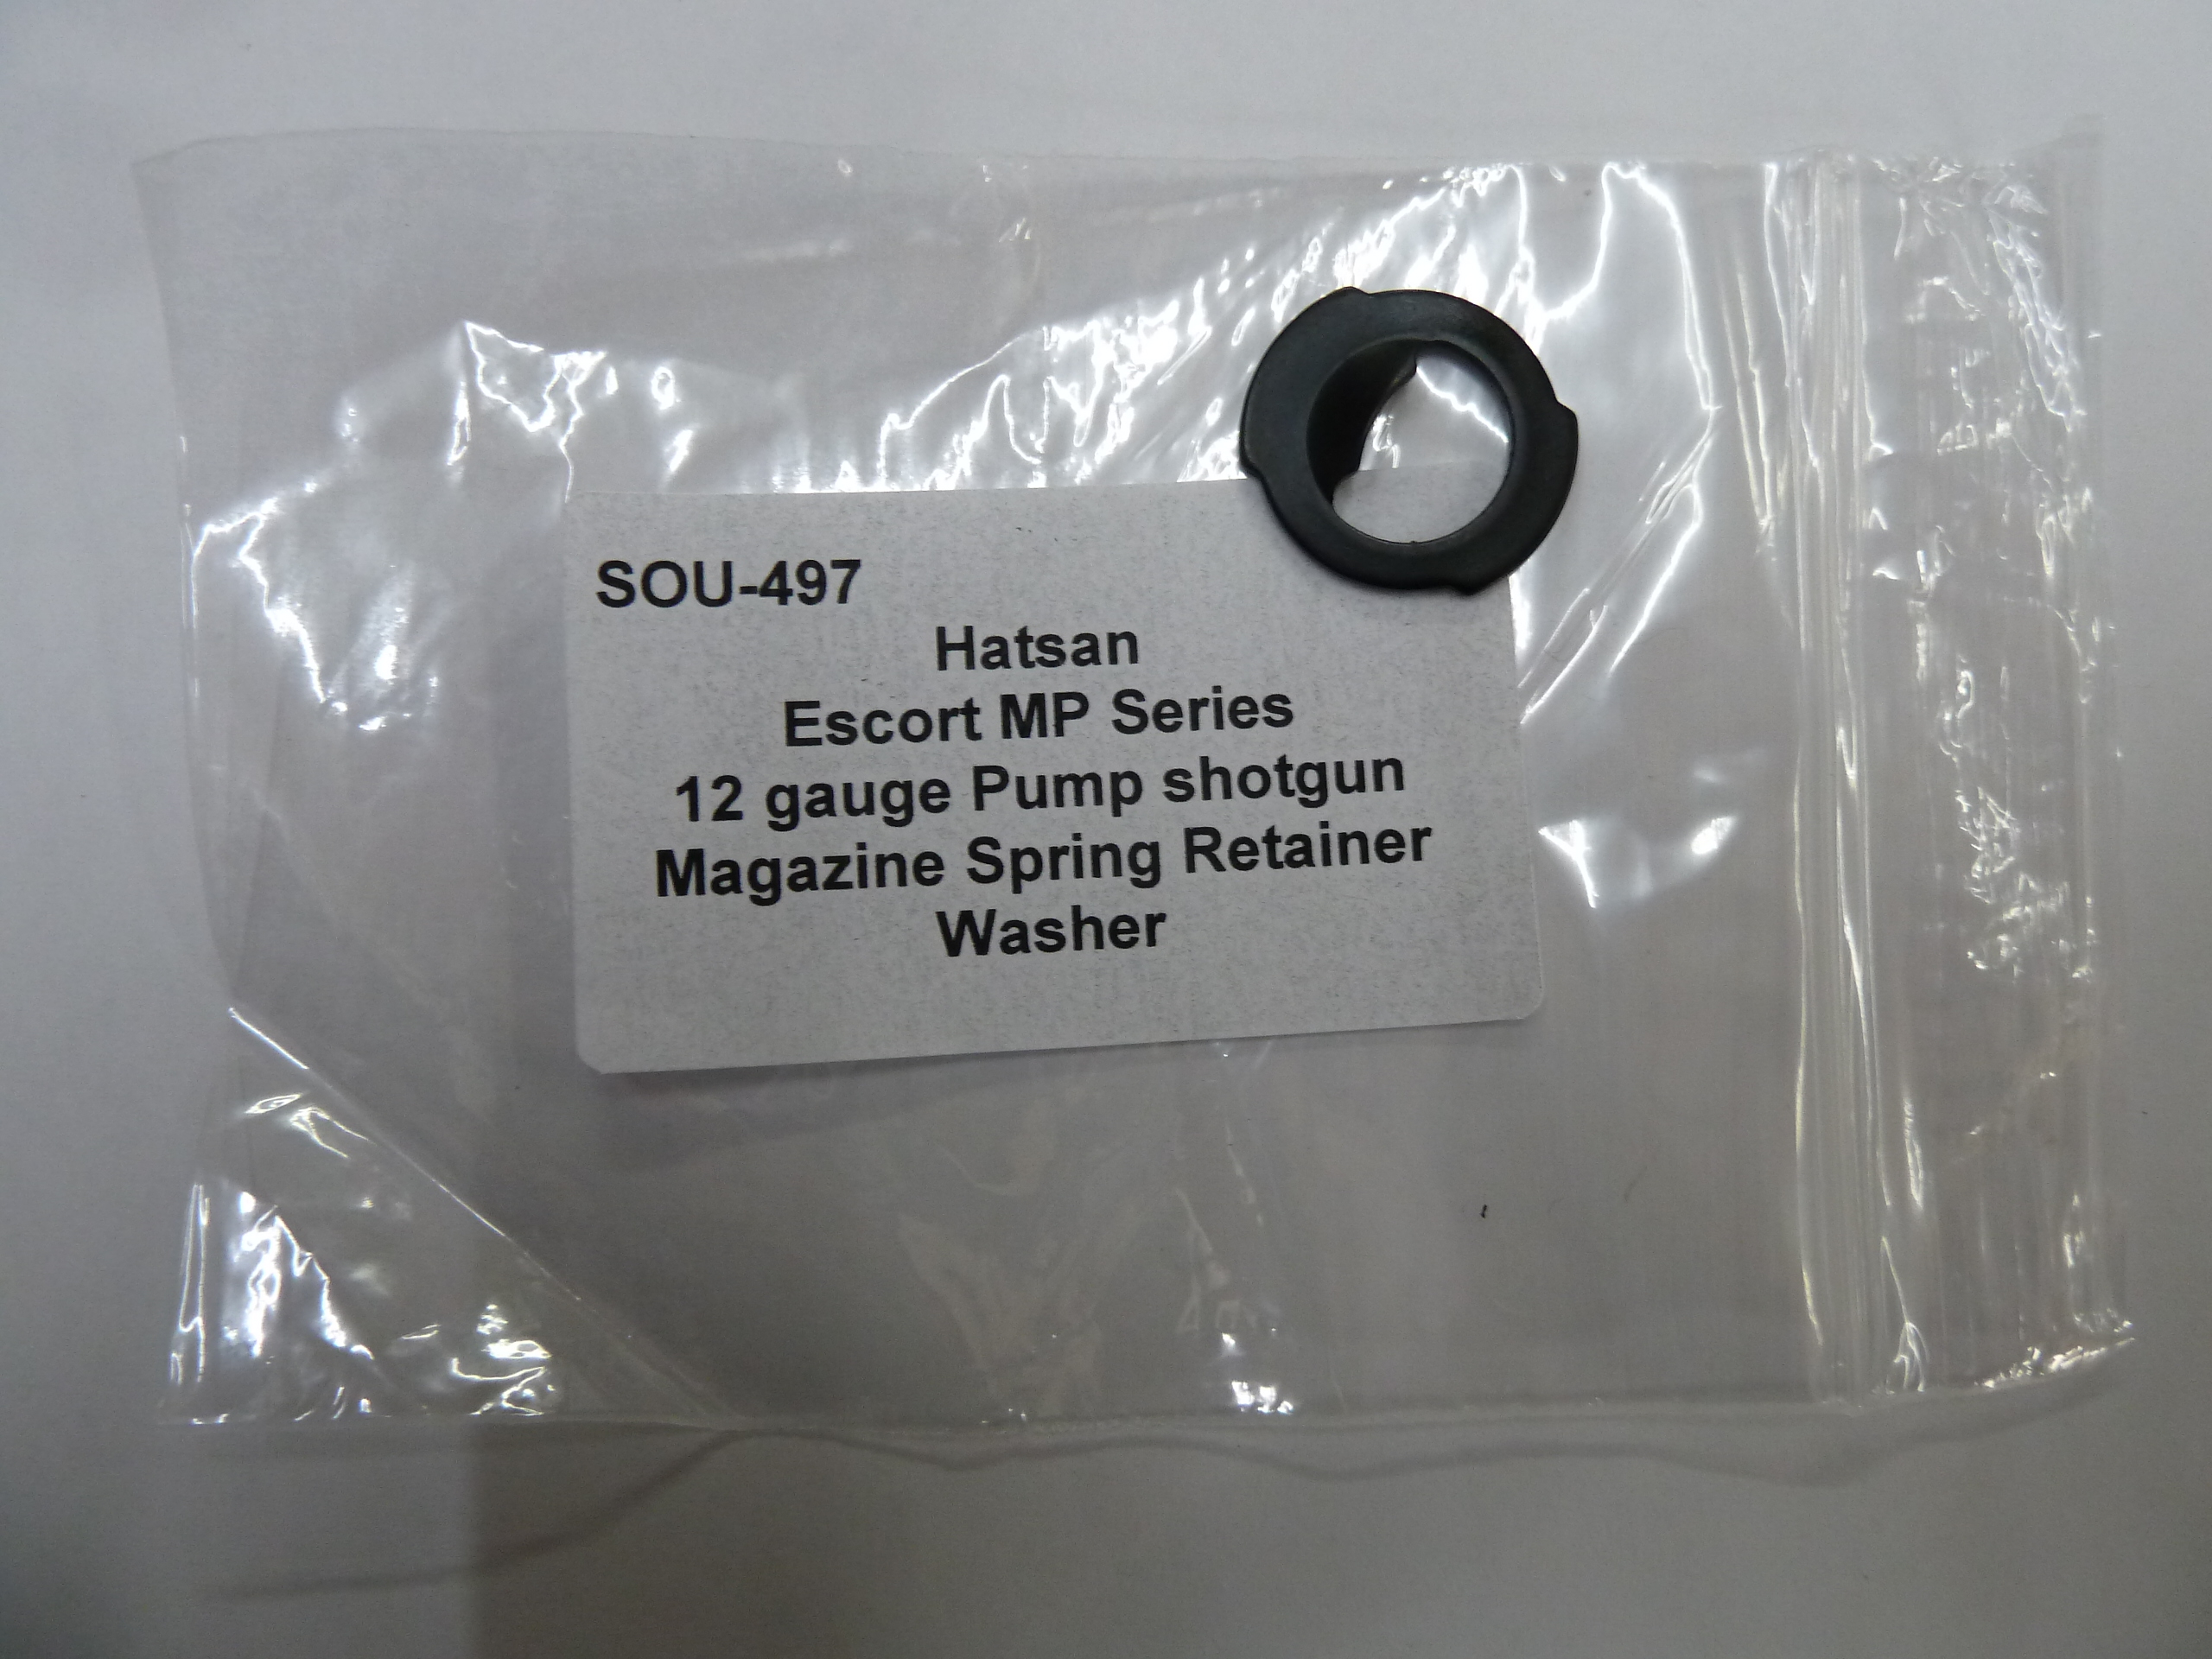 SOU-497 Hatsan Escort MP series 12 gauge pump shotgun magazine spring retainer washer